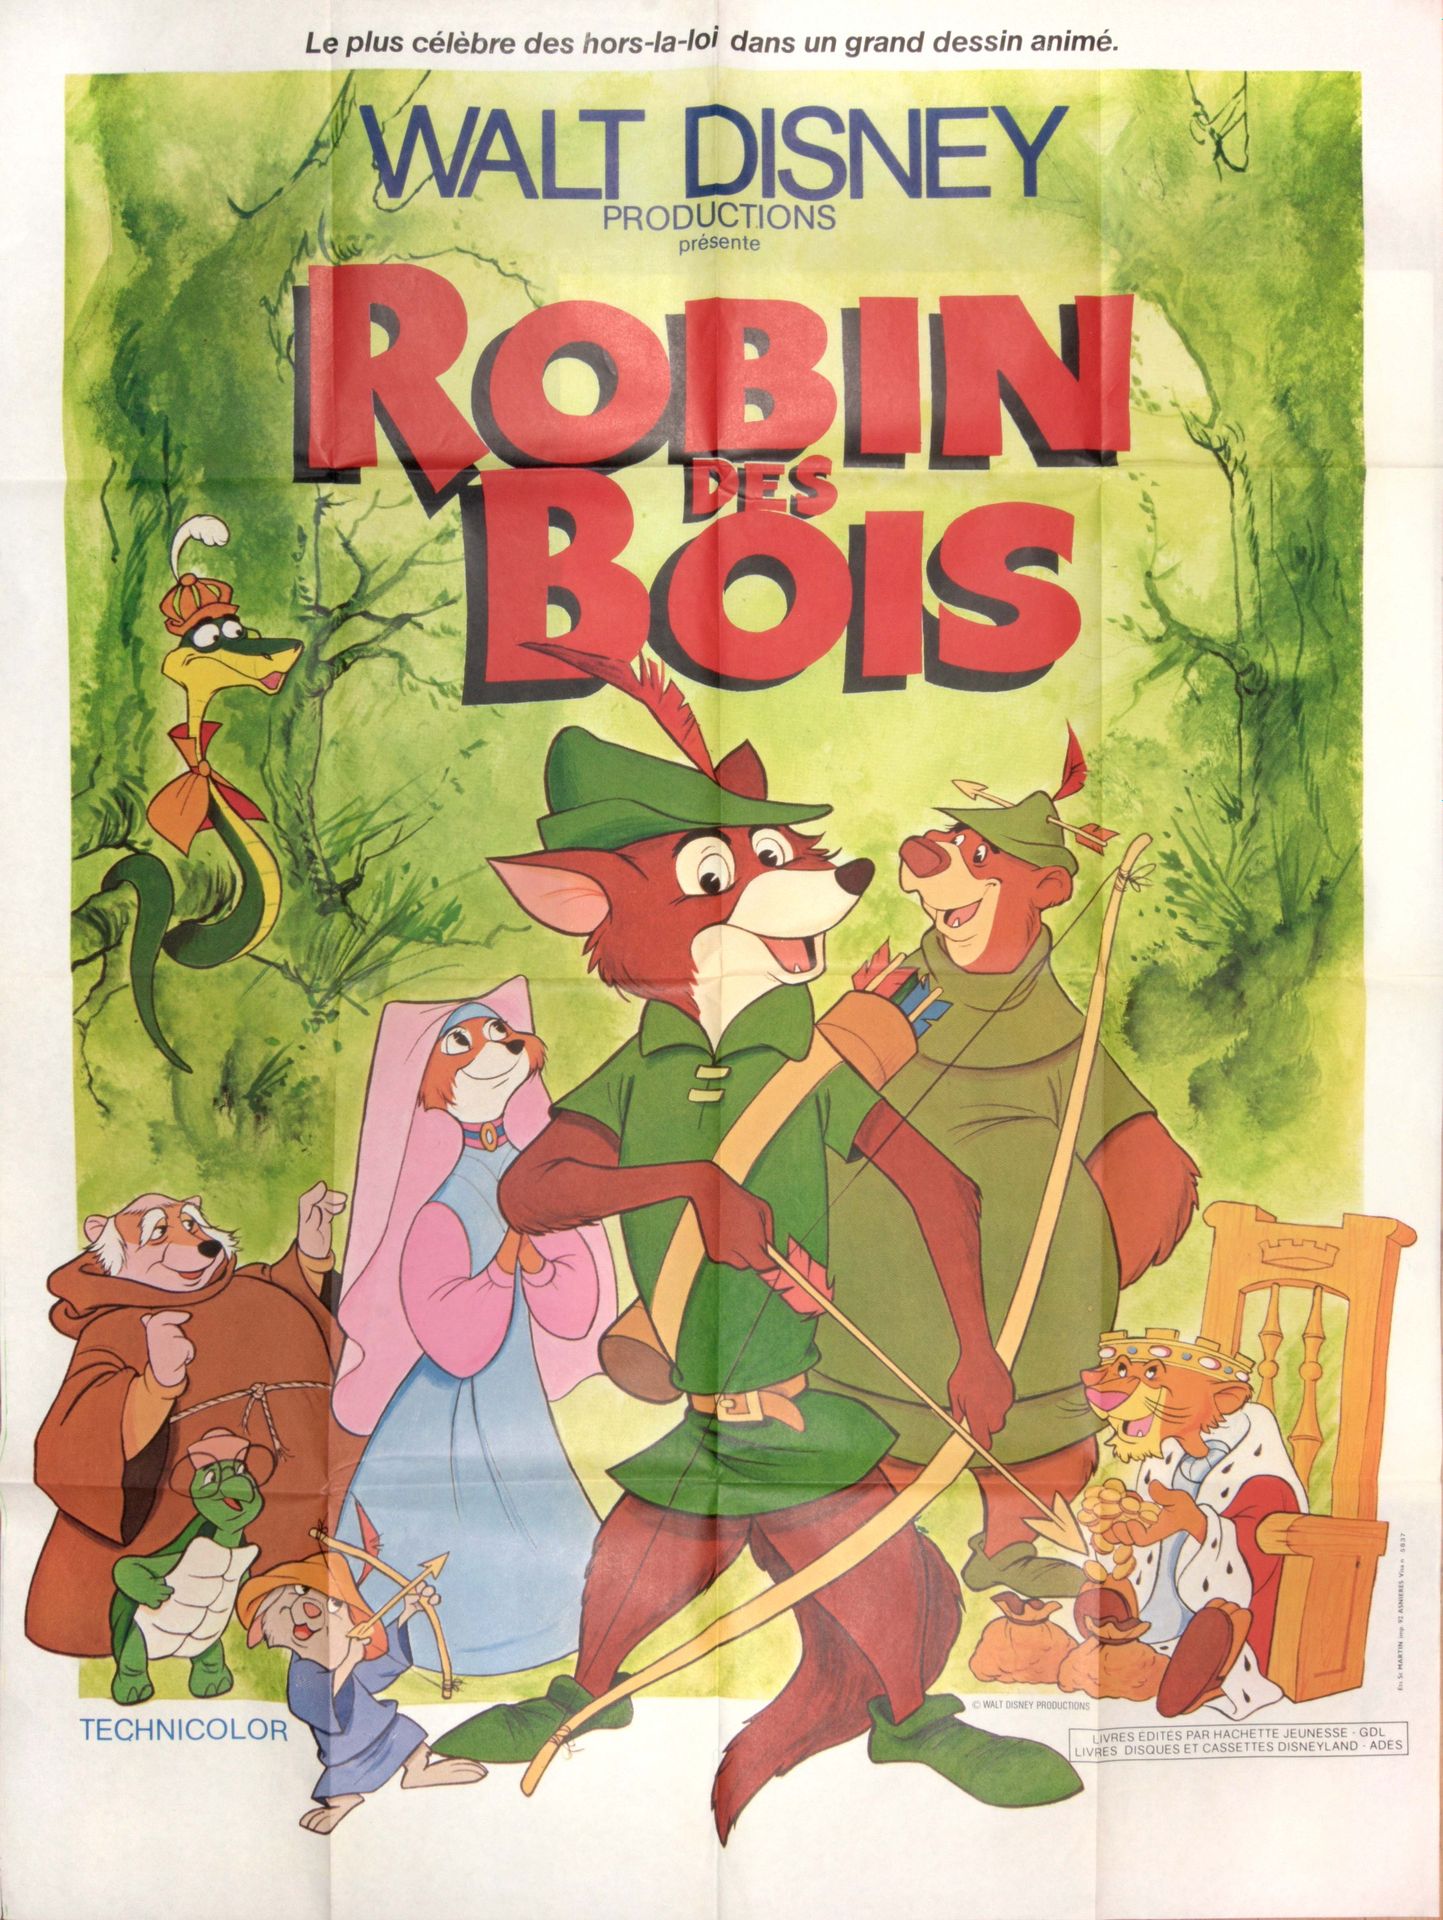 Disney, Walt 罗宾汉，大动画片中最著名的逃犯（1974年

彩色海报（155 x 115厘米）。折叠的，状态良好